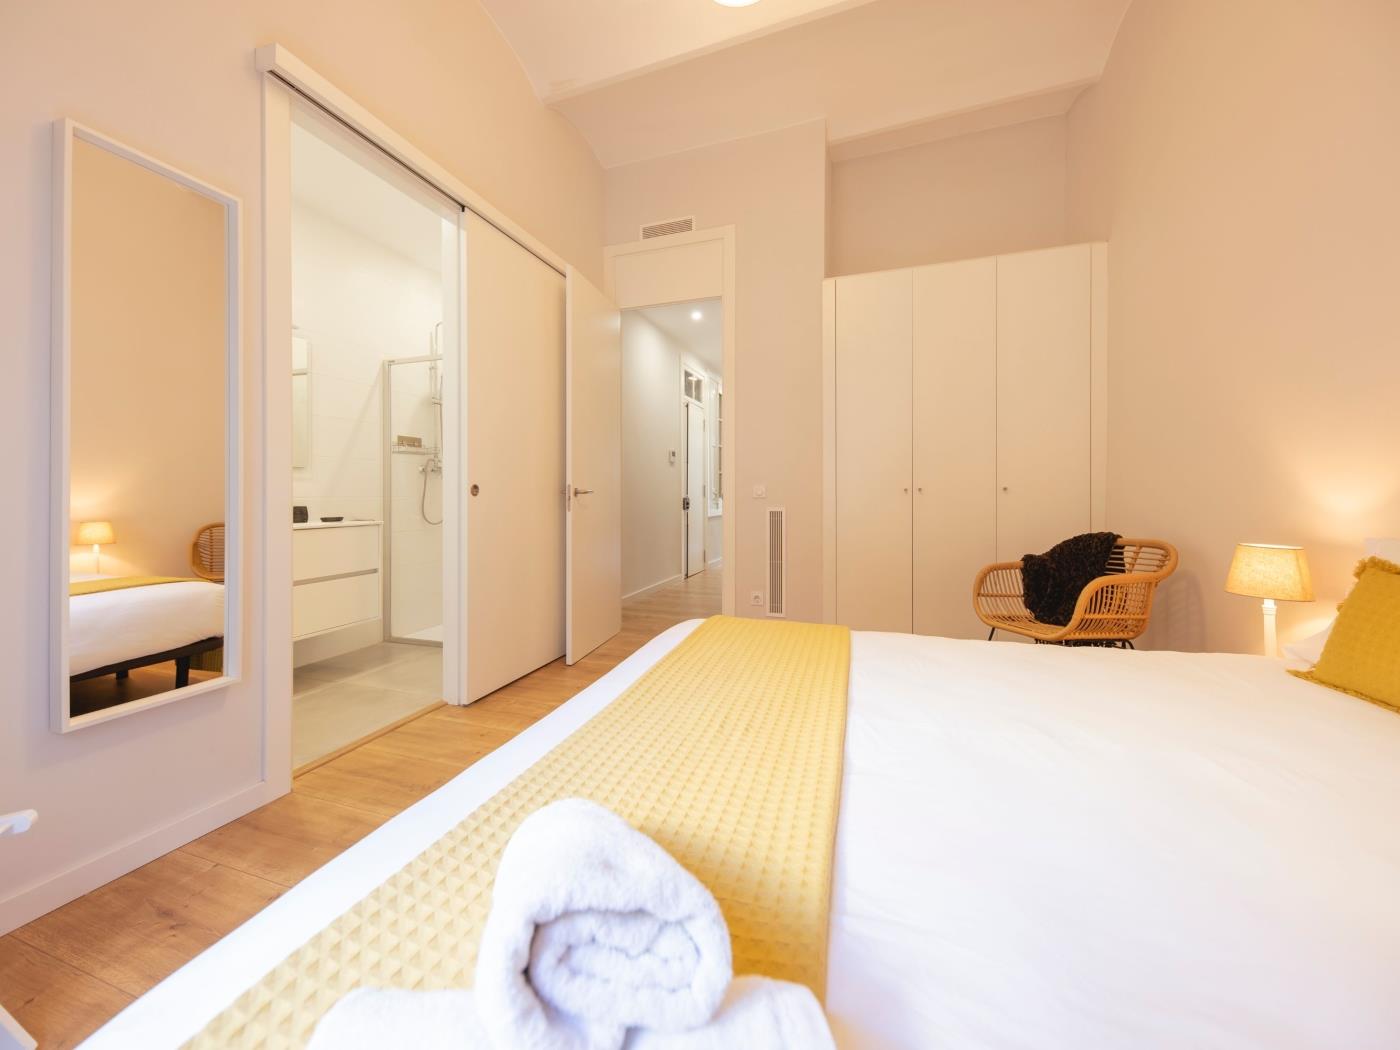 Bravissimo Riu Onyar, modern i amb 3 habitacions a Girona